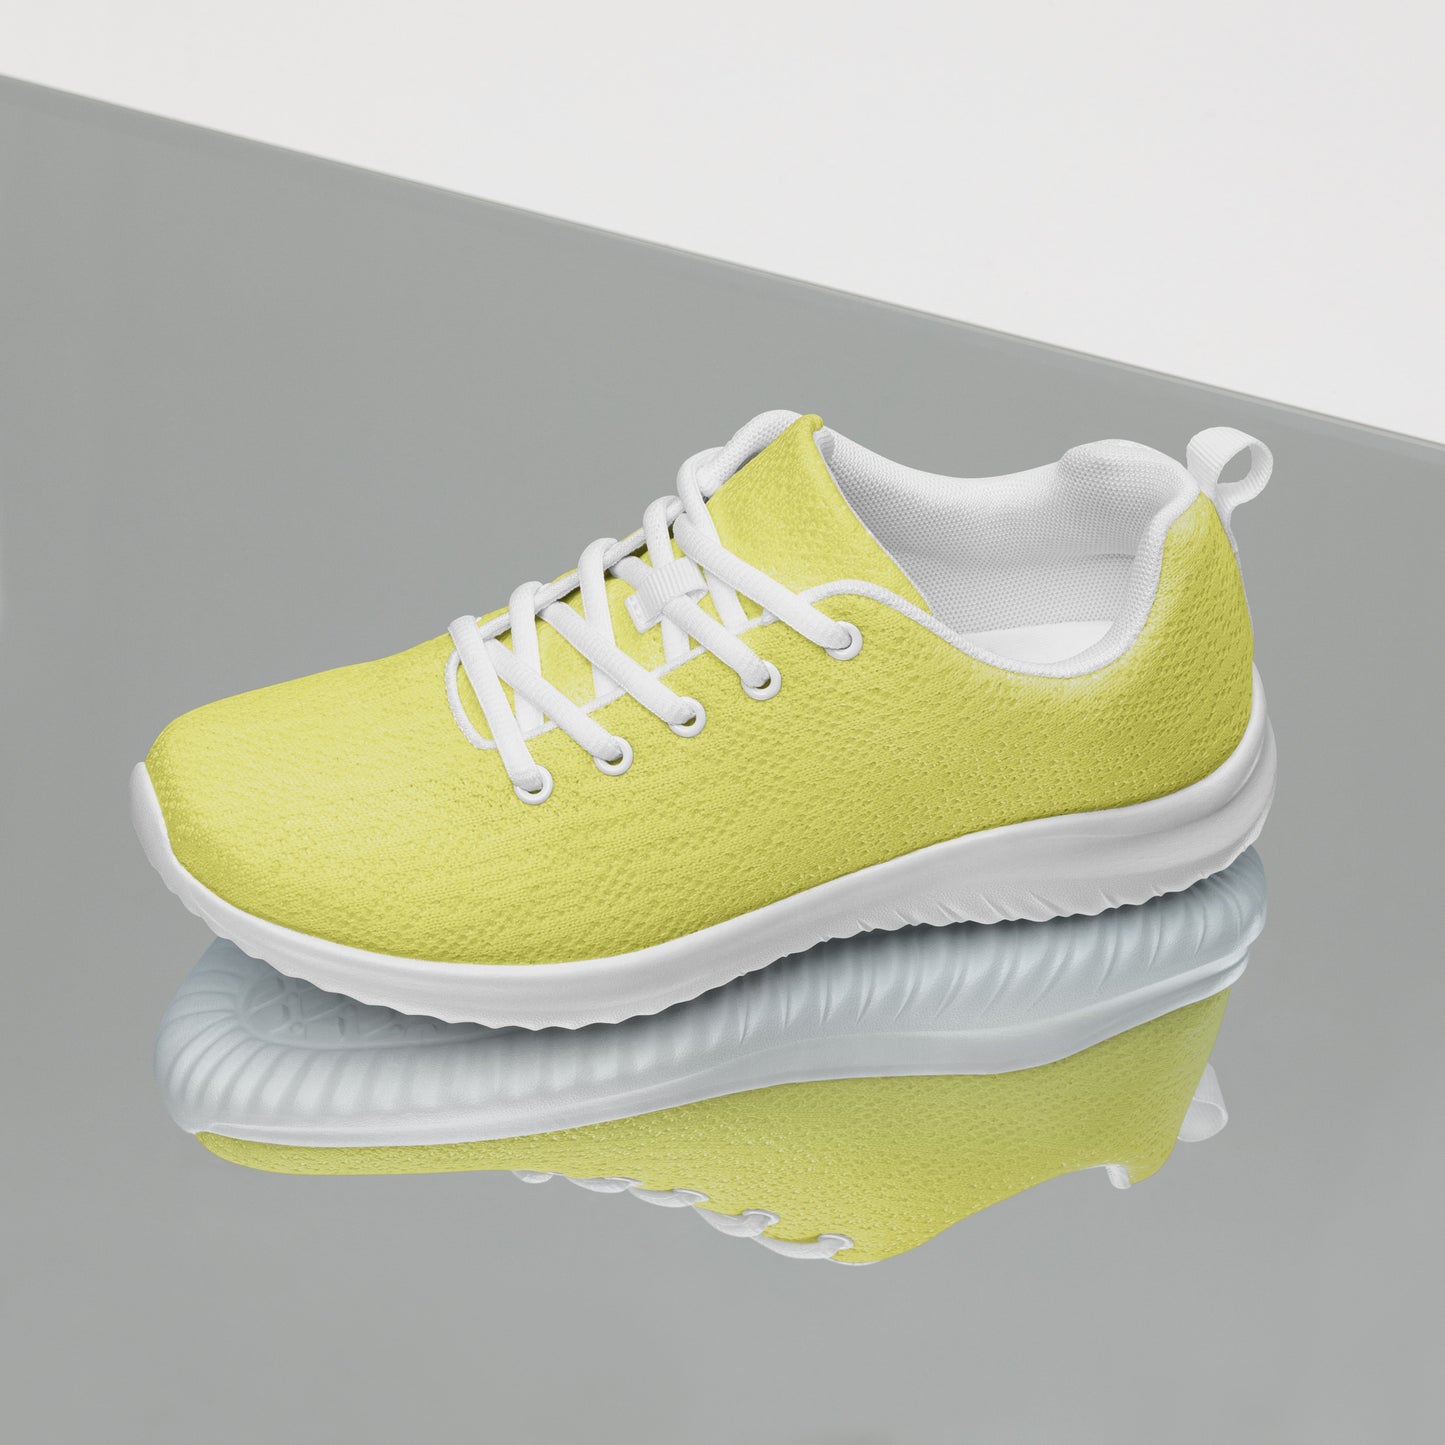 DASH Lemonade Yellow Women’s Athletic Shoes Lightweight Breathable Design by IOBI Original Apparel